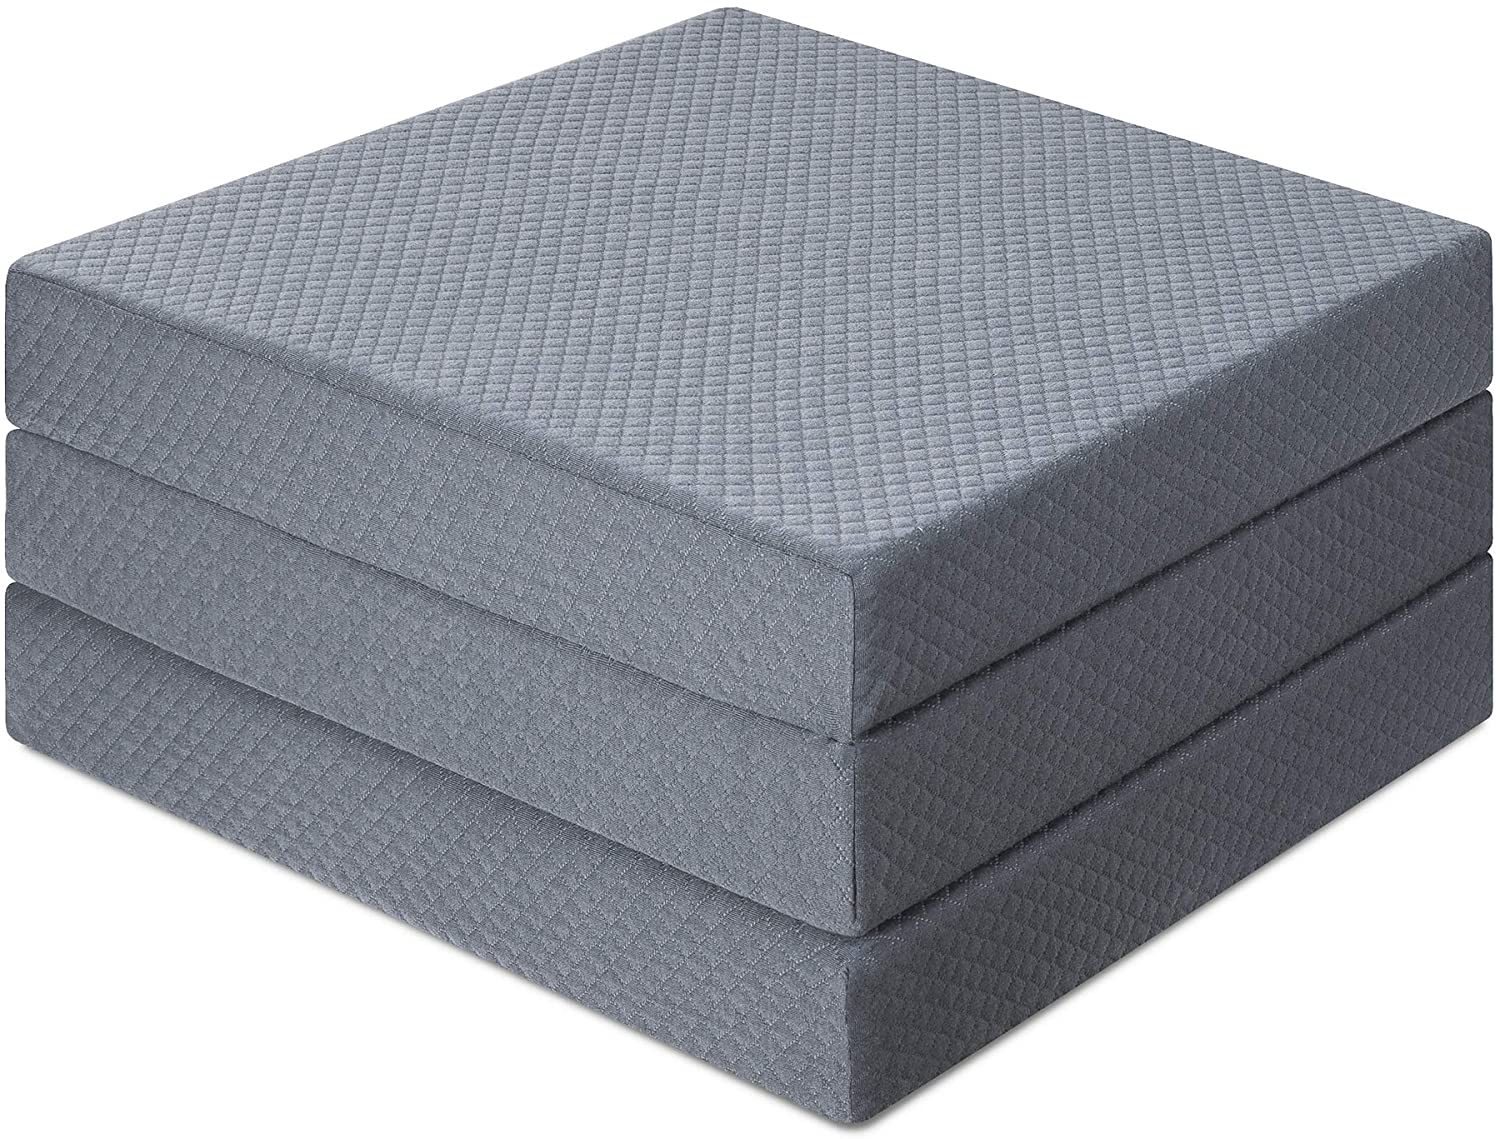 olee sleep topper tri-folding memory foam mattress